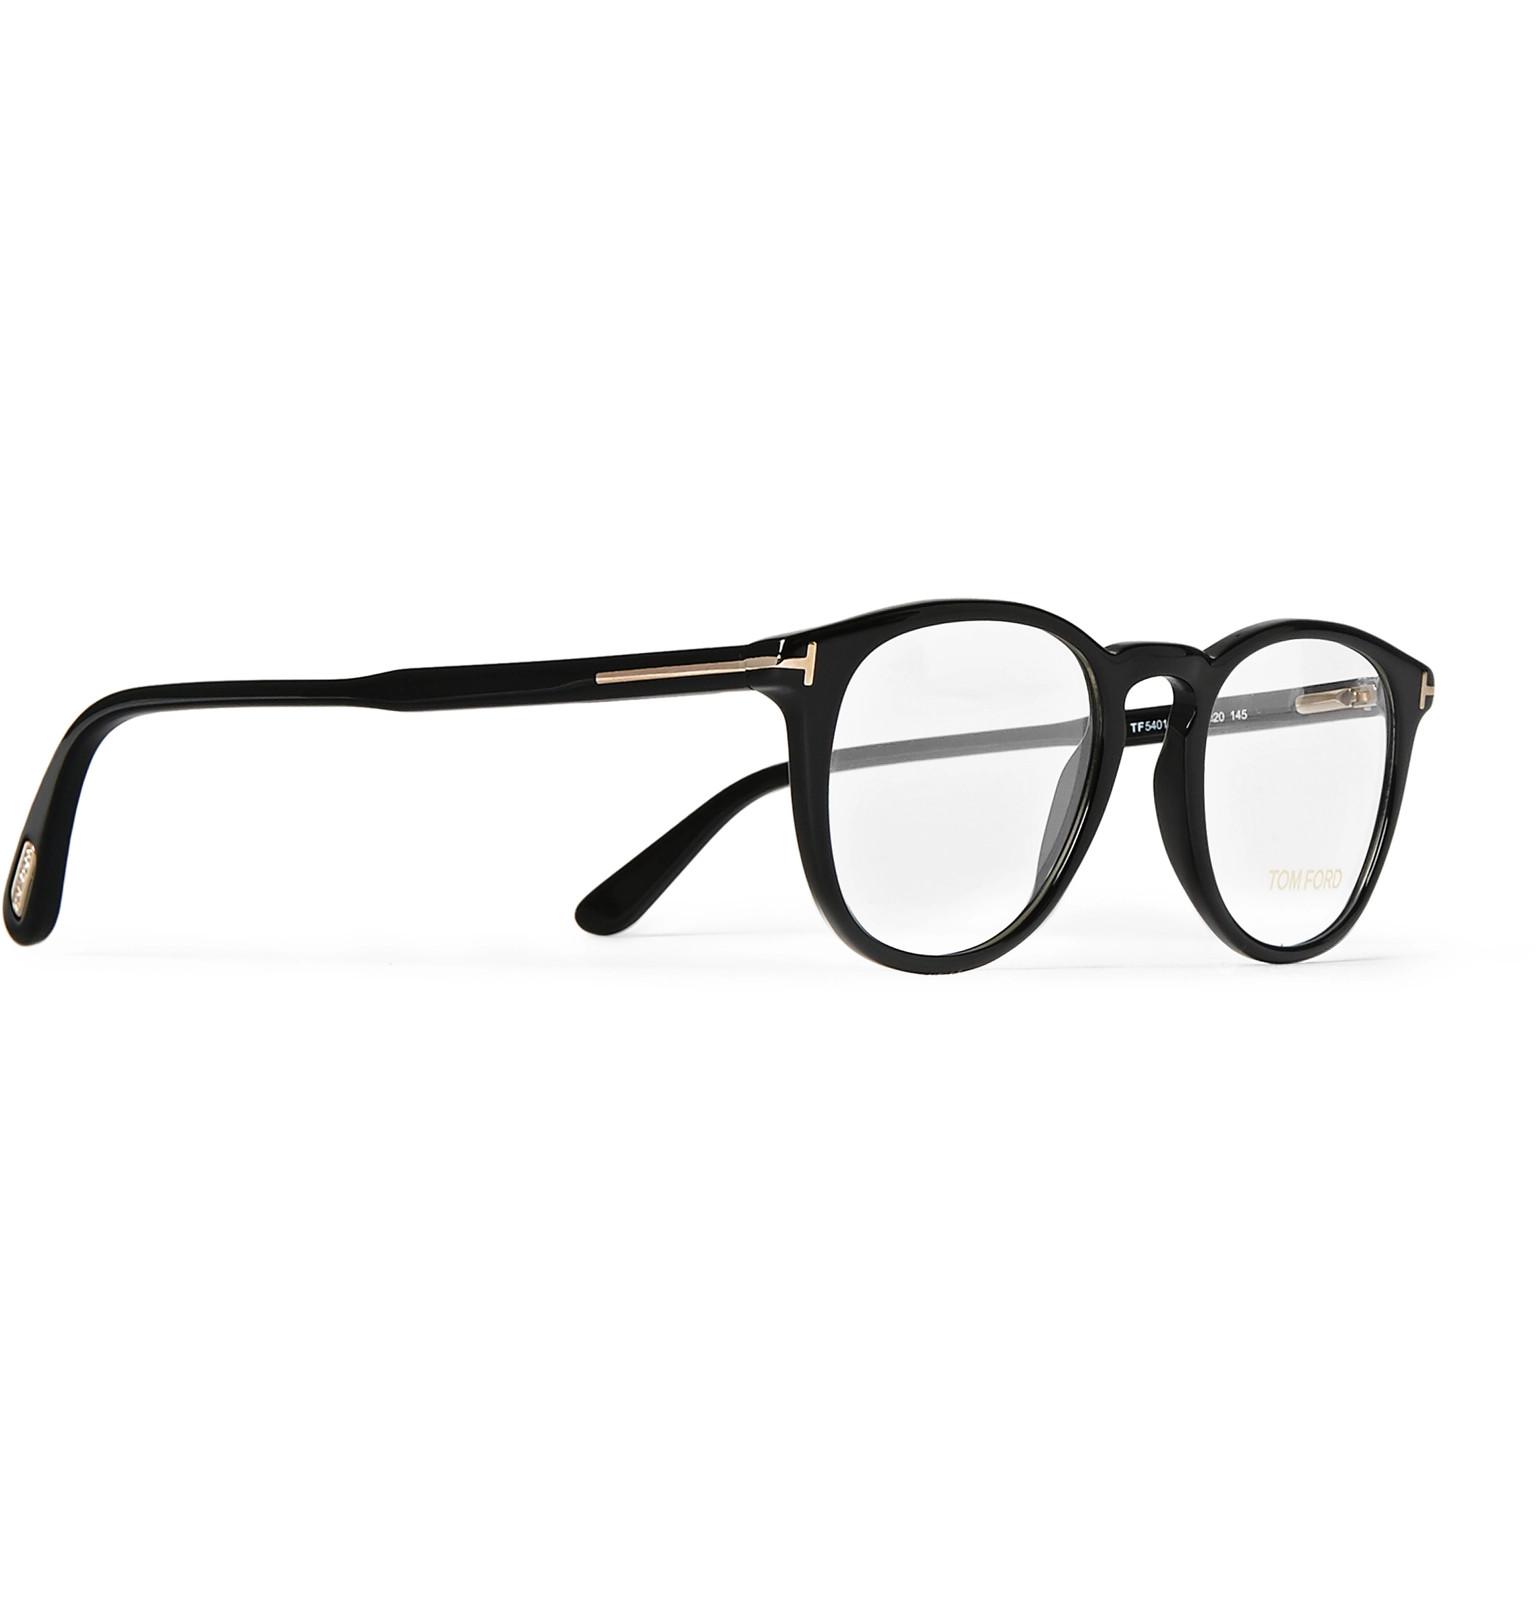 Lyst - Tom Ford Round-frame Acetate Optical Glasses in Black for Men